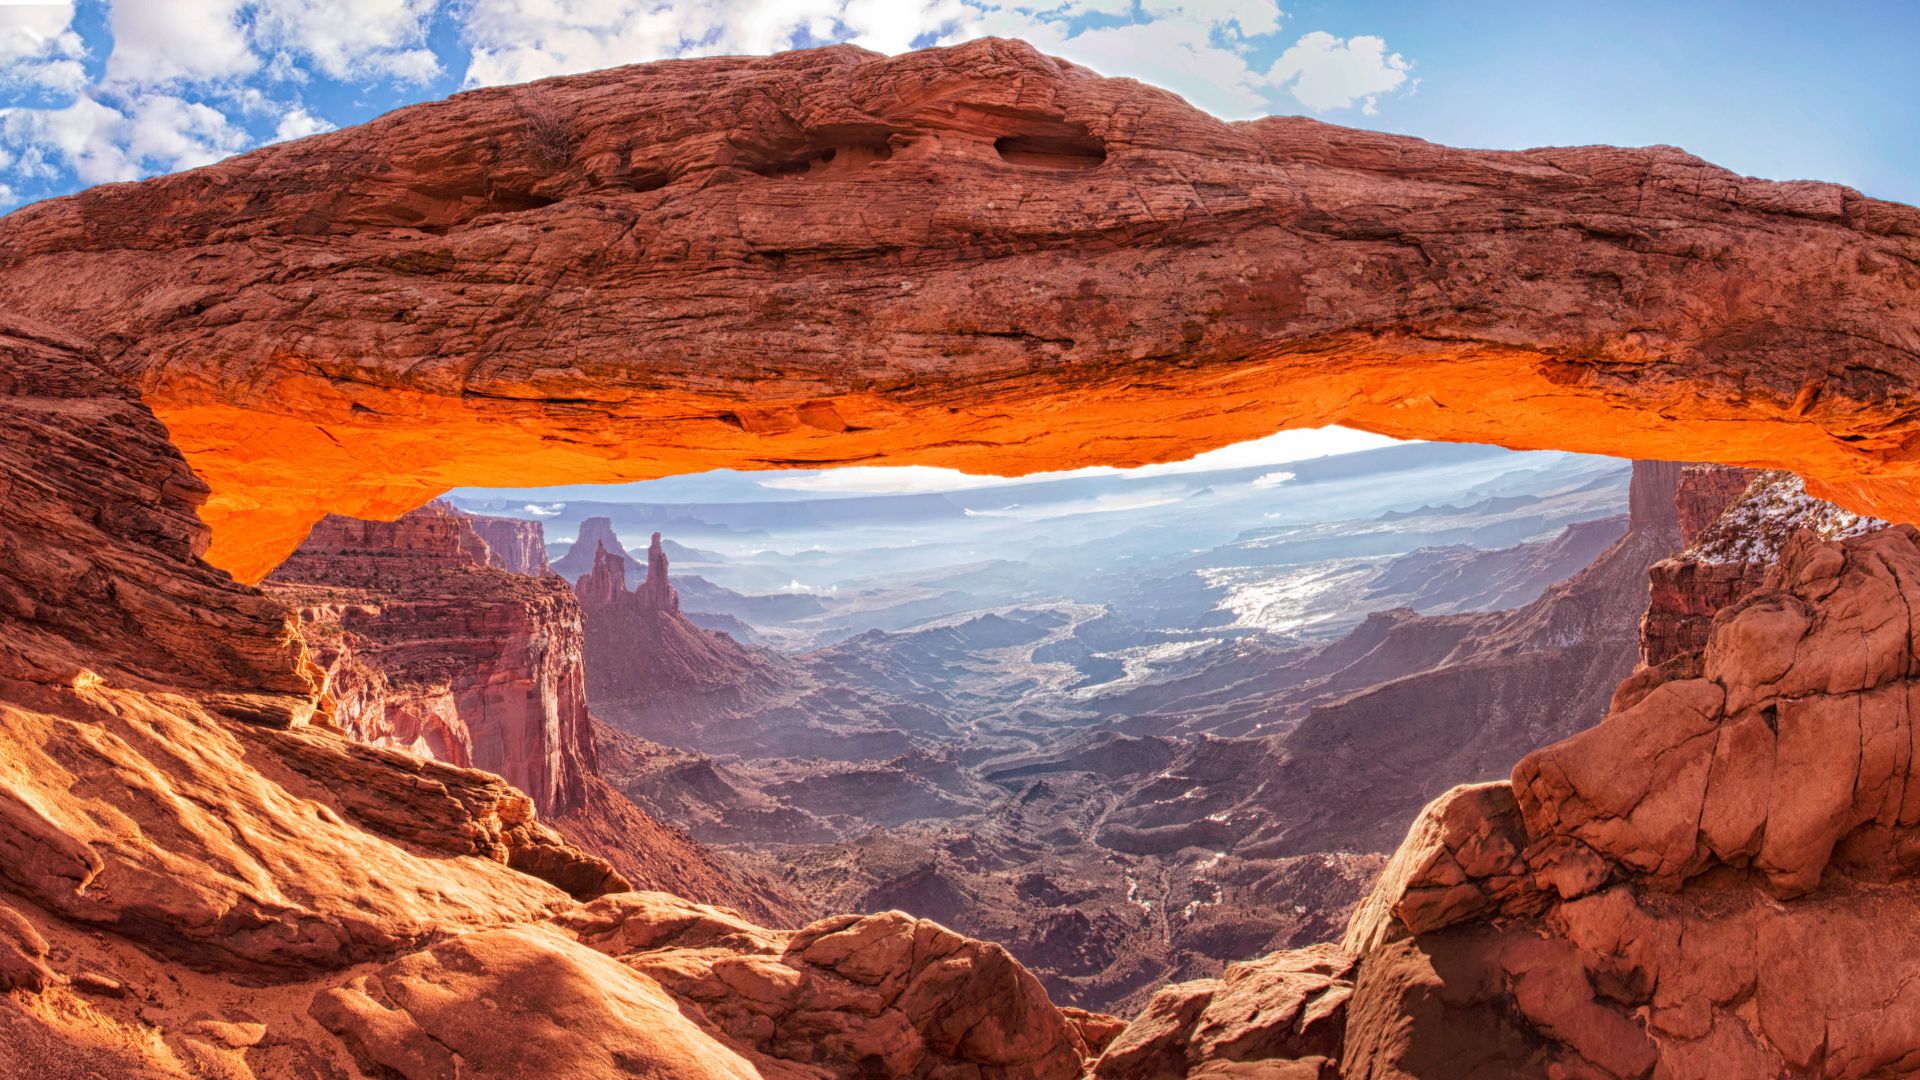 Каньонлендс, 4k, HD, Юта, США, Canyonlands National Park, 4k, HD wallpaper, Utah, USA (horizontal)